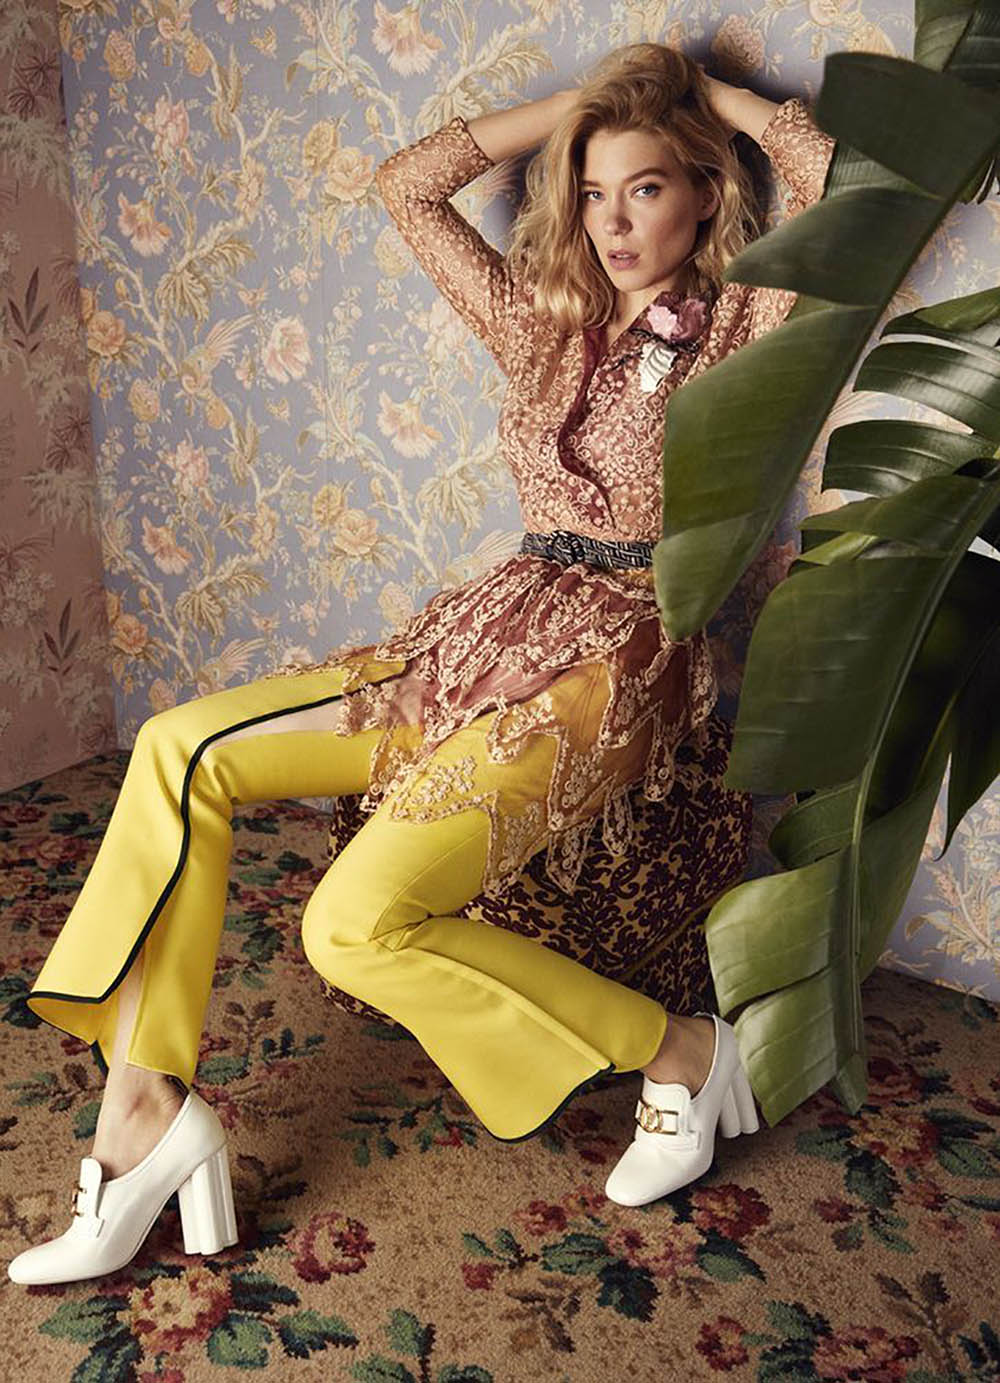 Léa Seydoux covers Harper’s Bazaar UK May 2020 by Alexi Lubomirski